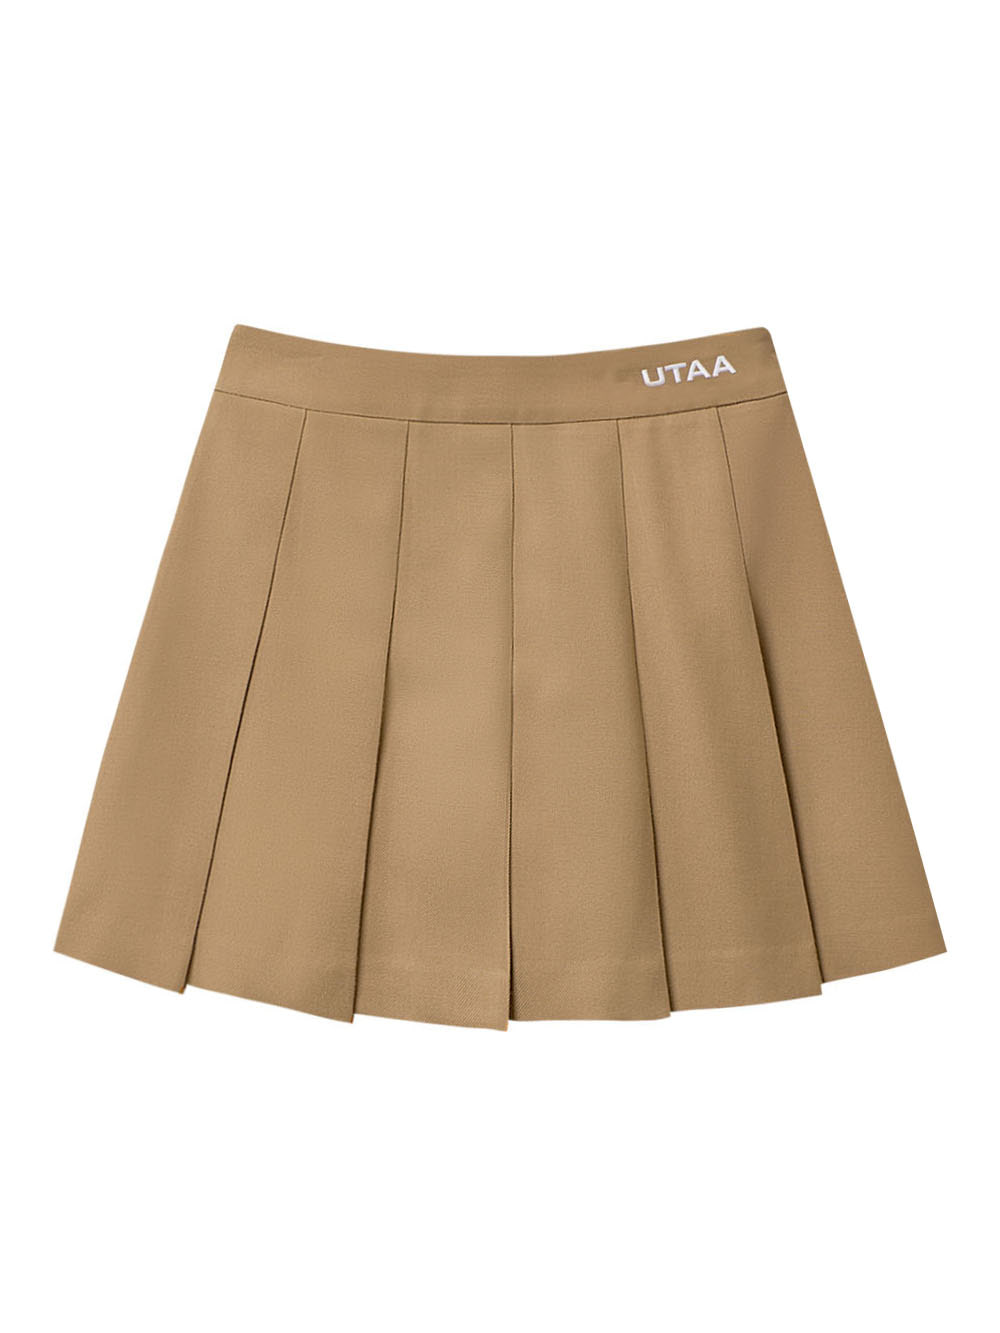 UTAA Hidden Logo Basic Fan Skirt : Beige (UC1SKF764BE)